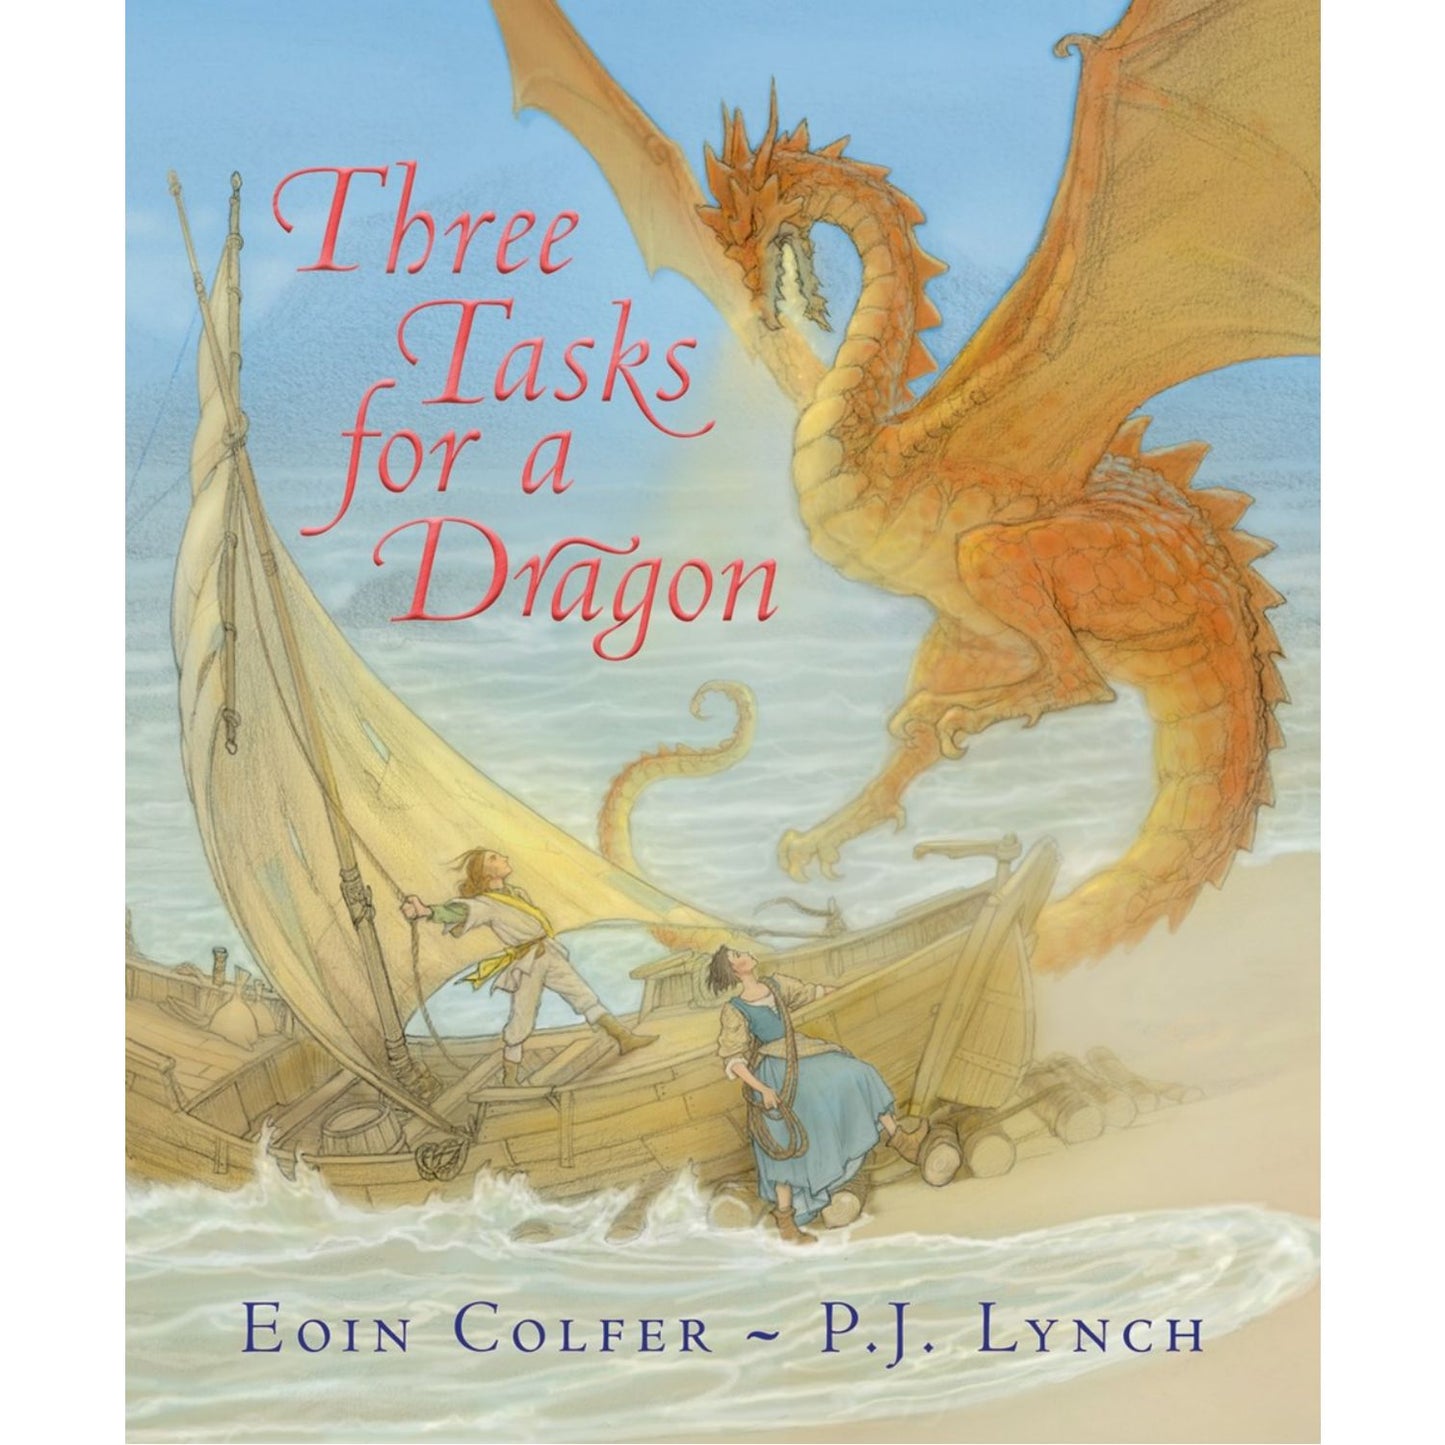 Three Tasks for a Dragon | Hardcover | Children’s Book on Friendship